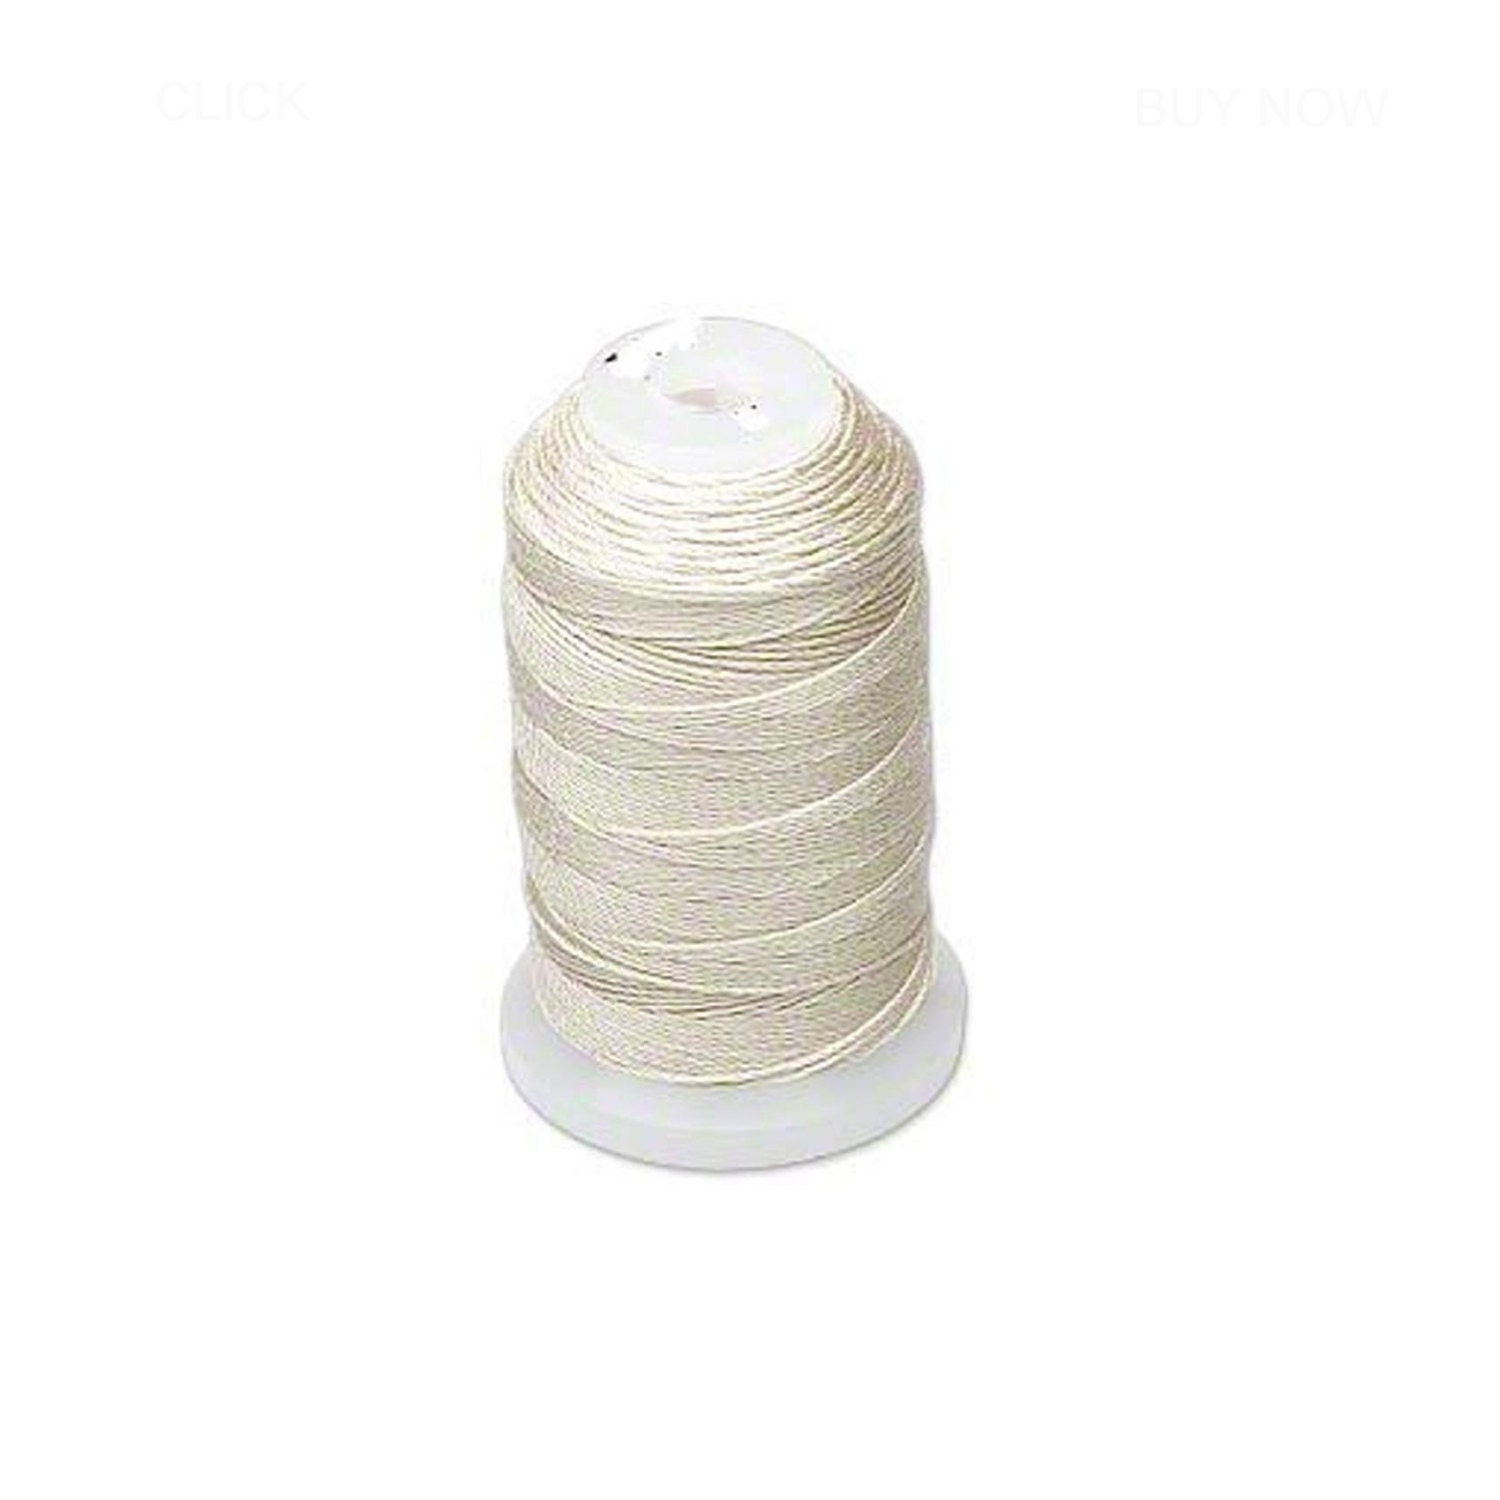 2 Spools Ecru MACRAME Cord Cotton Rope 1.5MM Cotton String Twisted CORD  Cotton Twine Macrame Rope 164yd/150m/492ft 